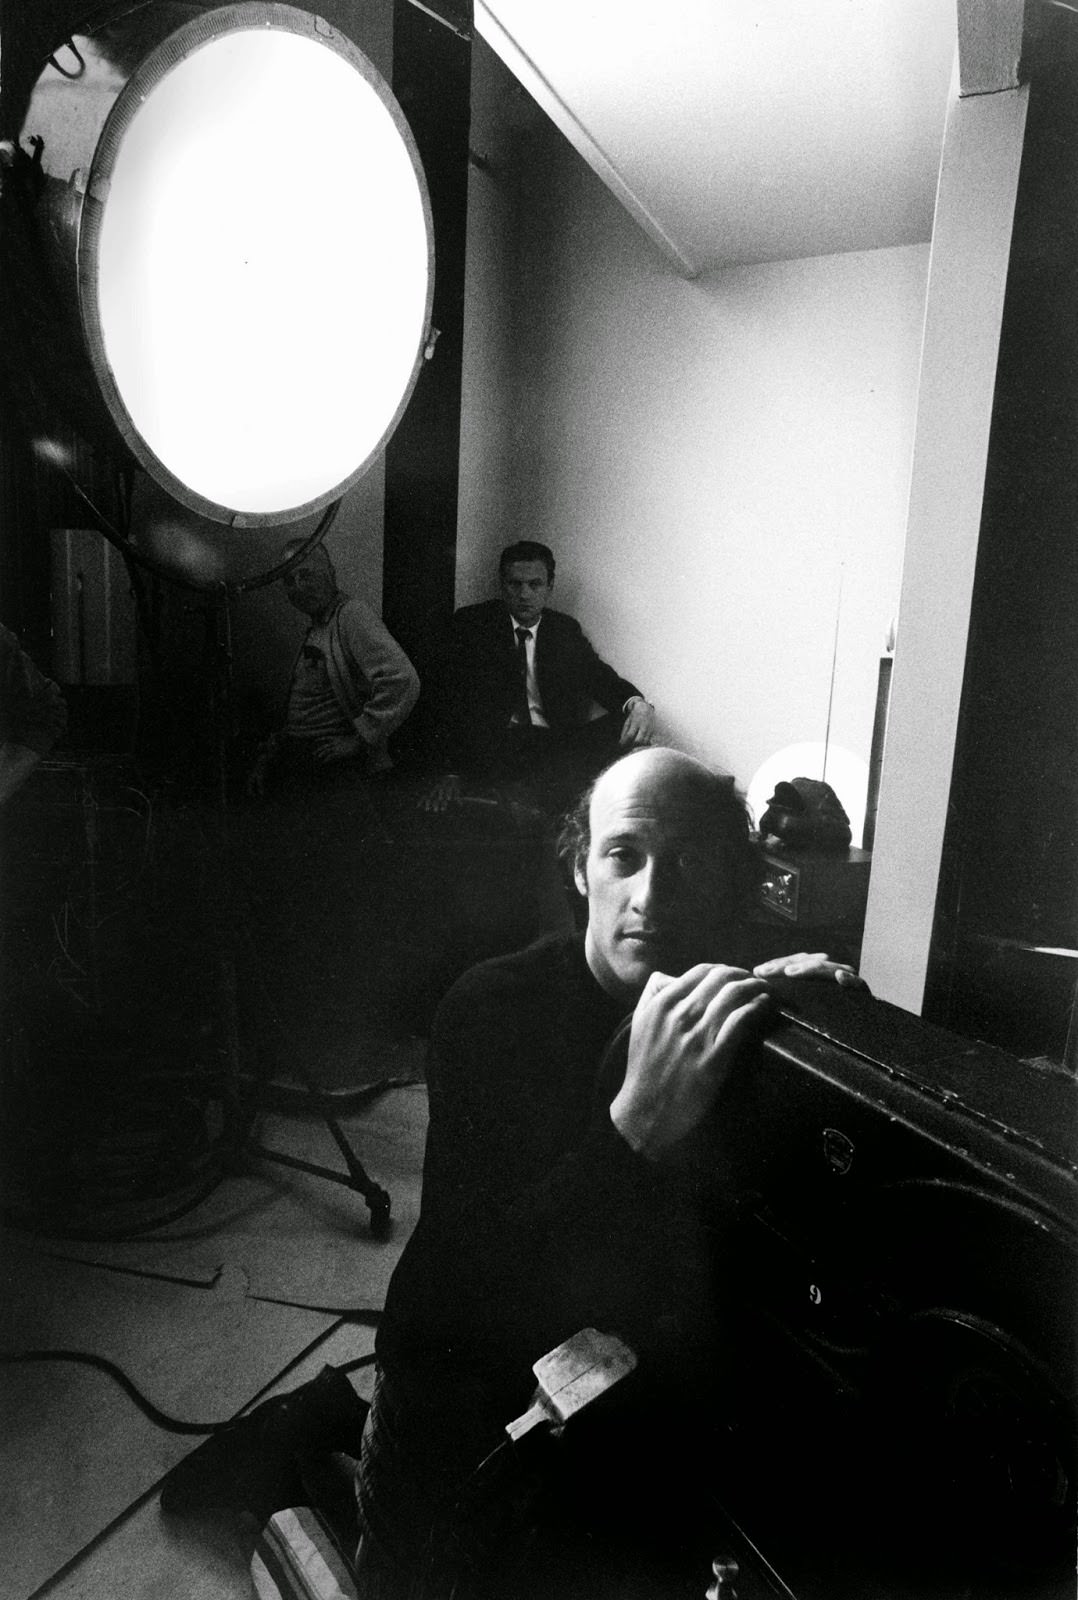 Director Richard Lester on the set of "Petulia" in San Francisco, 1967